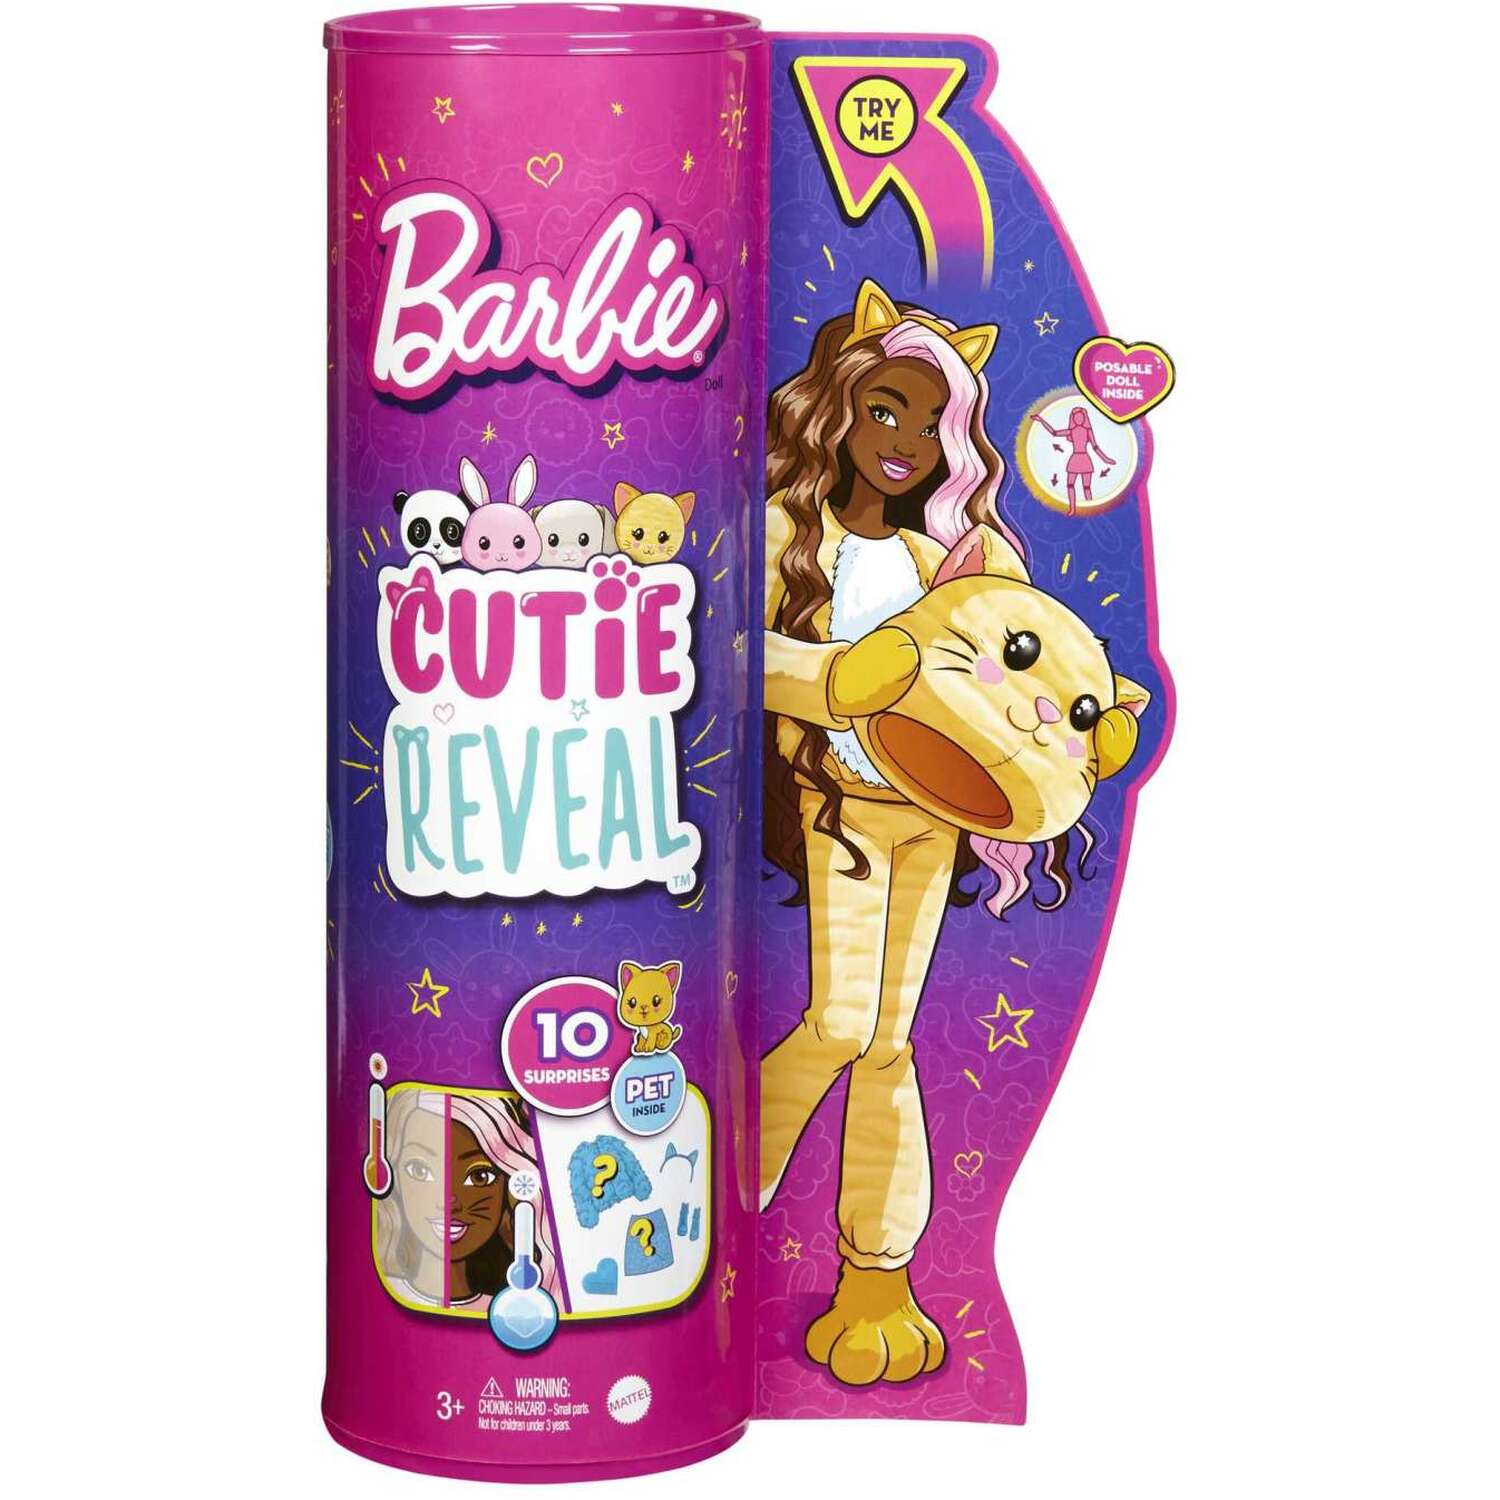 Barbie Cutie Reveal Cat Costume Doll - Pink Image 1